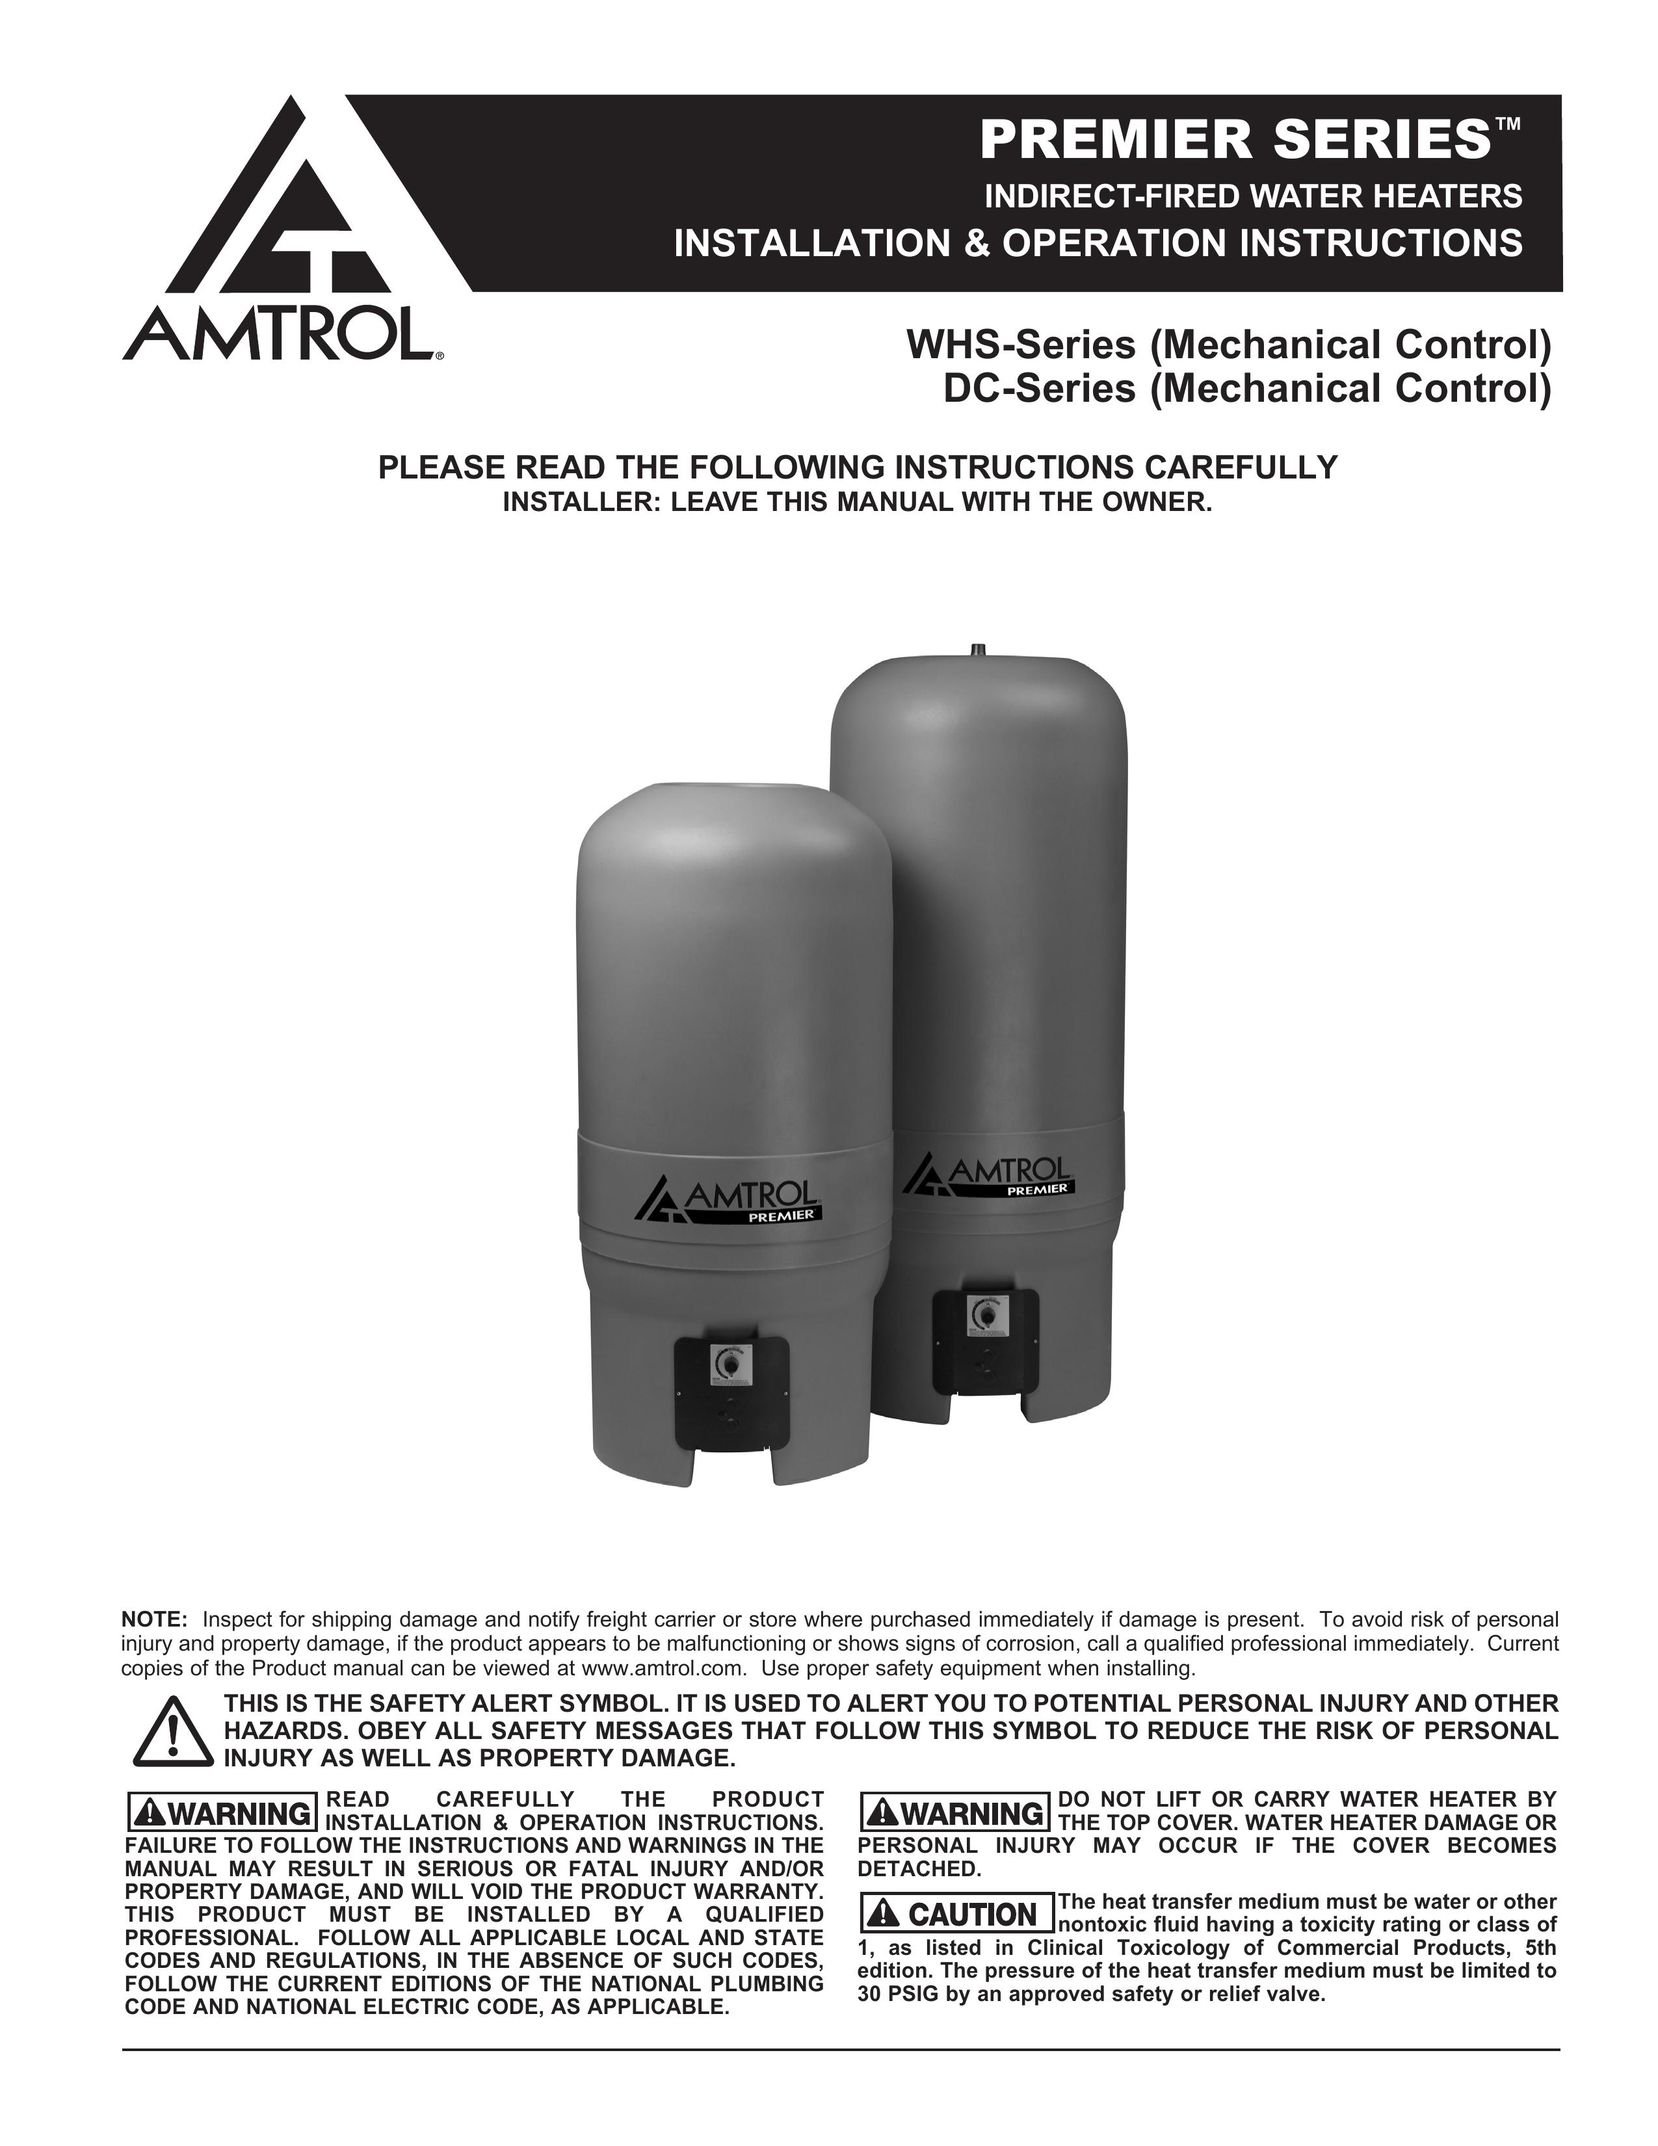 Amtrol whs-series Water Heater User Manual